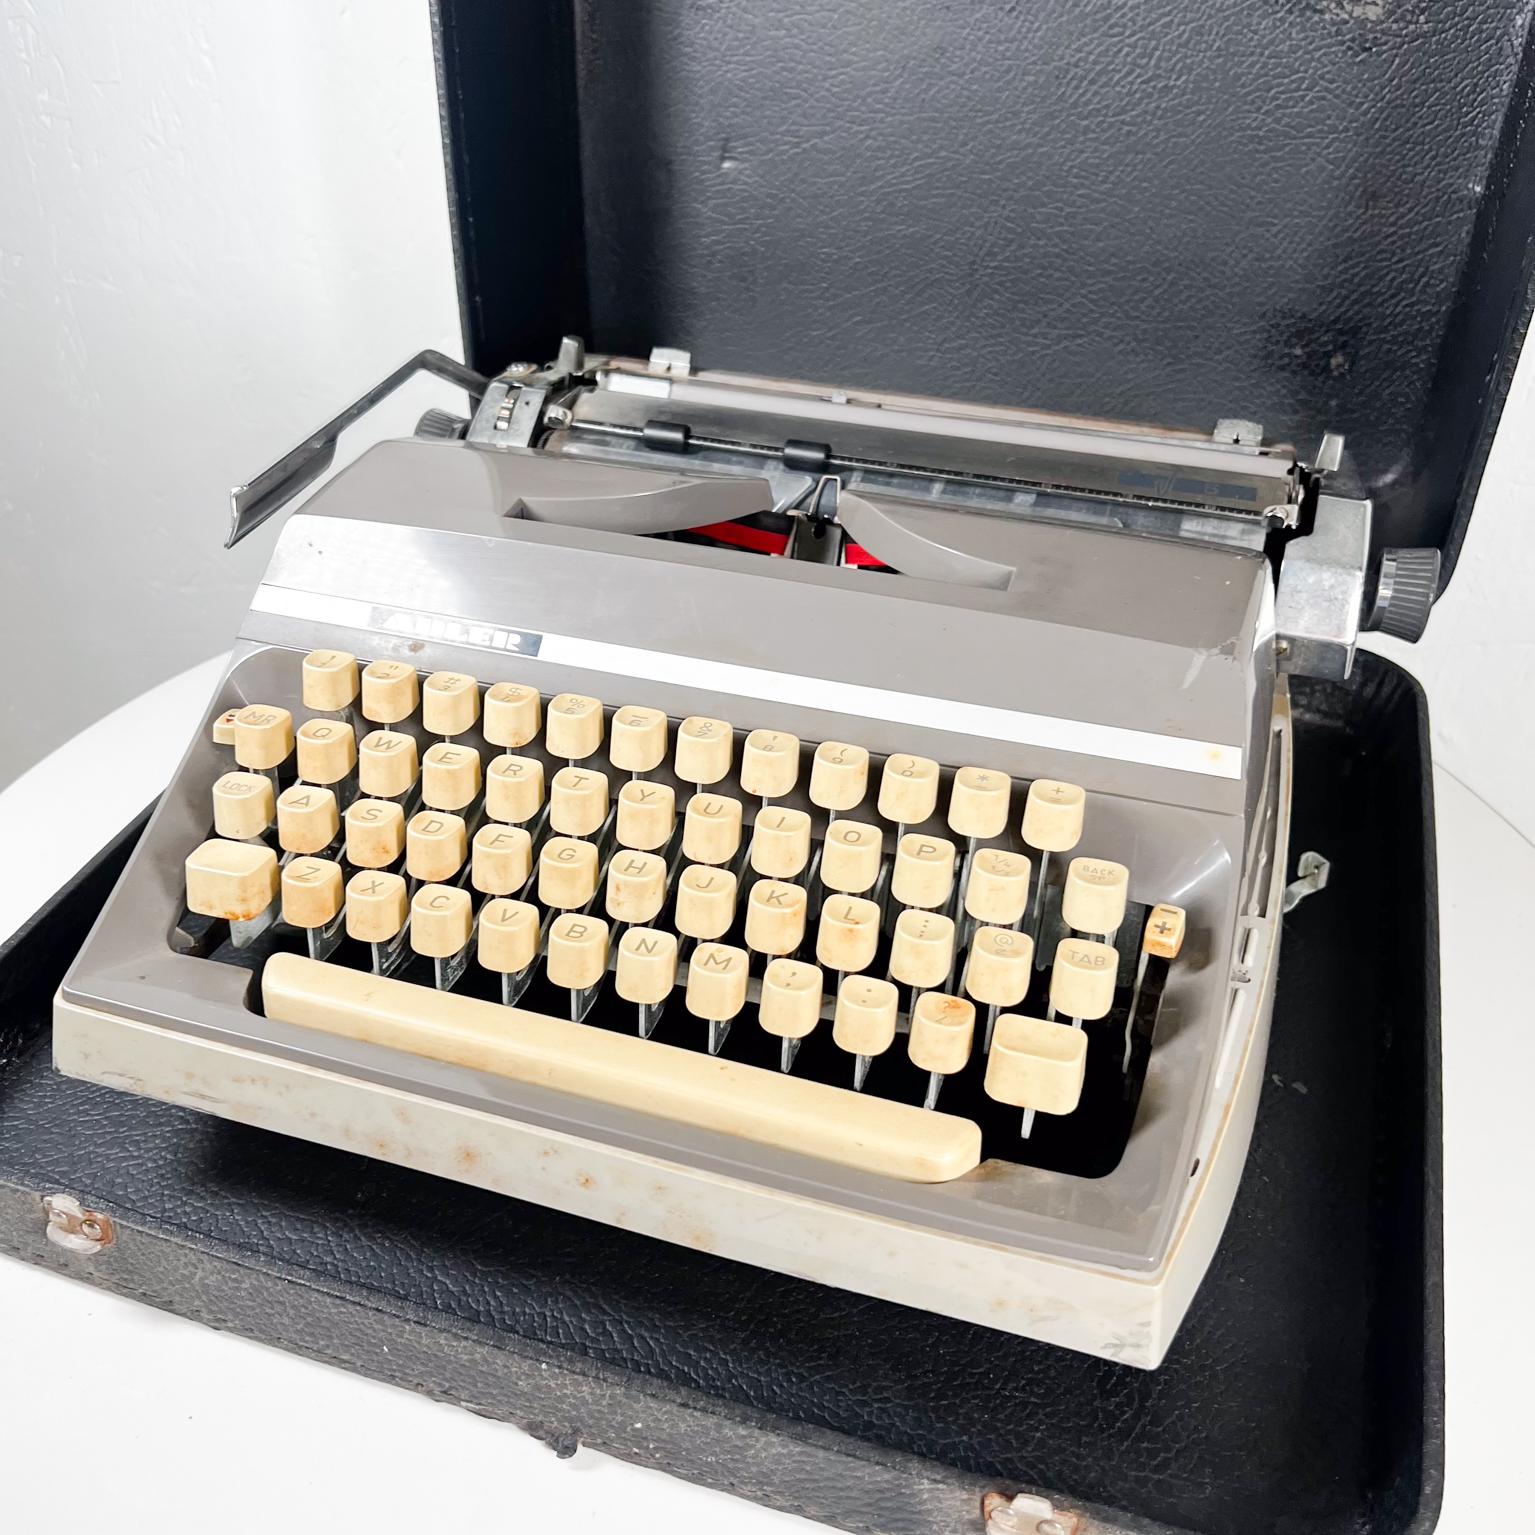 Metal 1968 Adler J5 Manual Typewriter with Case West Germany